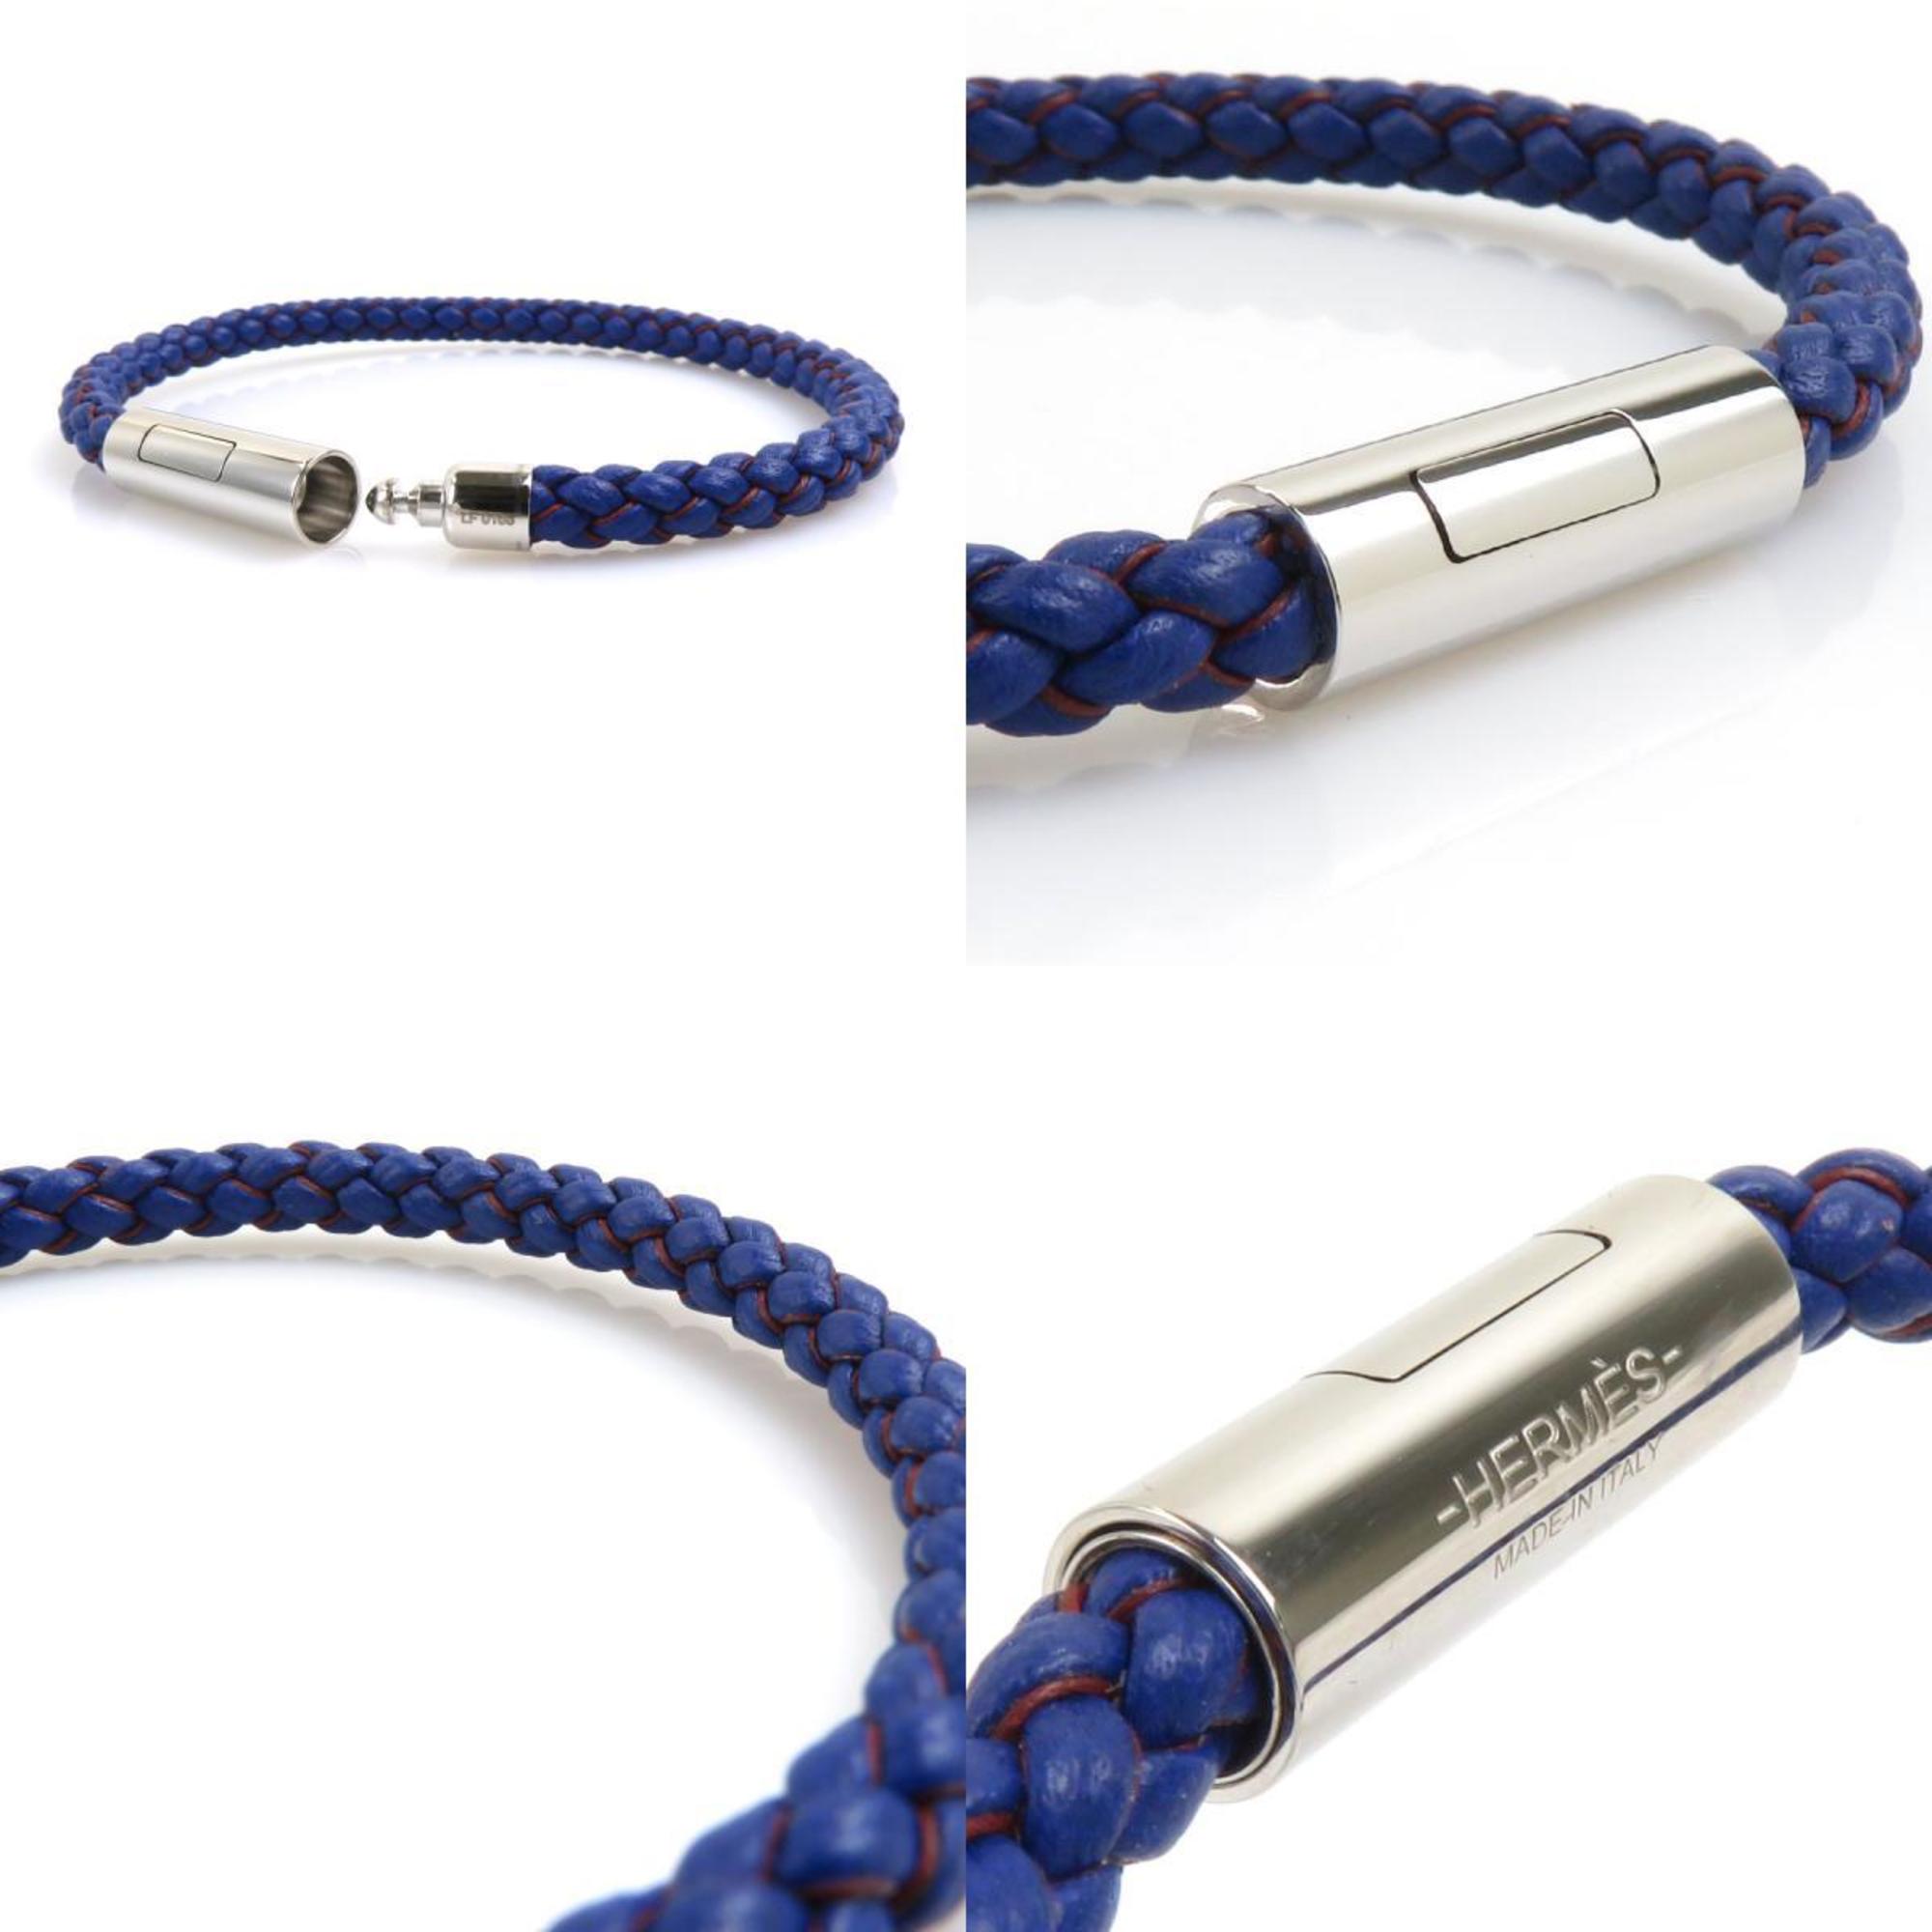 Hermes HERMES bracelet leather blue unisex r10025a